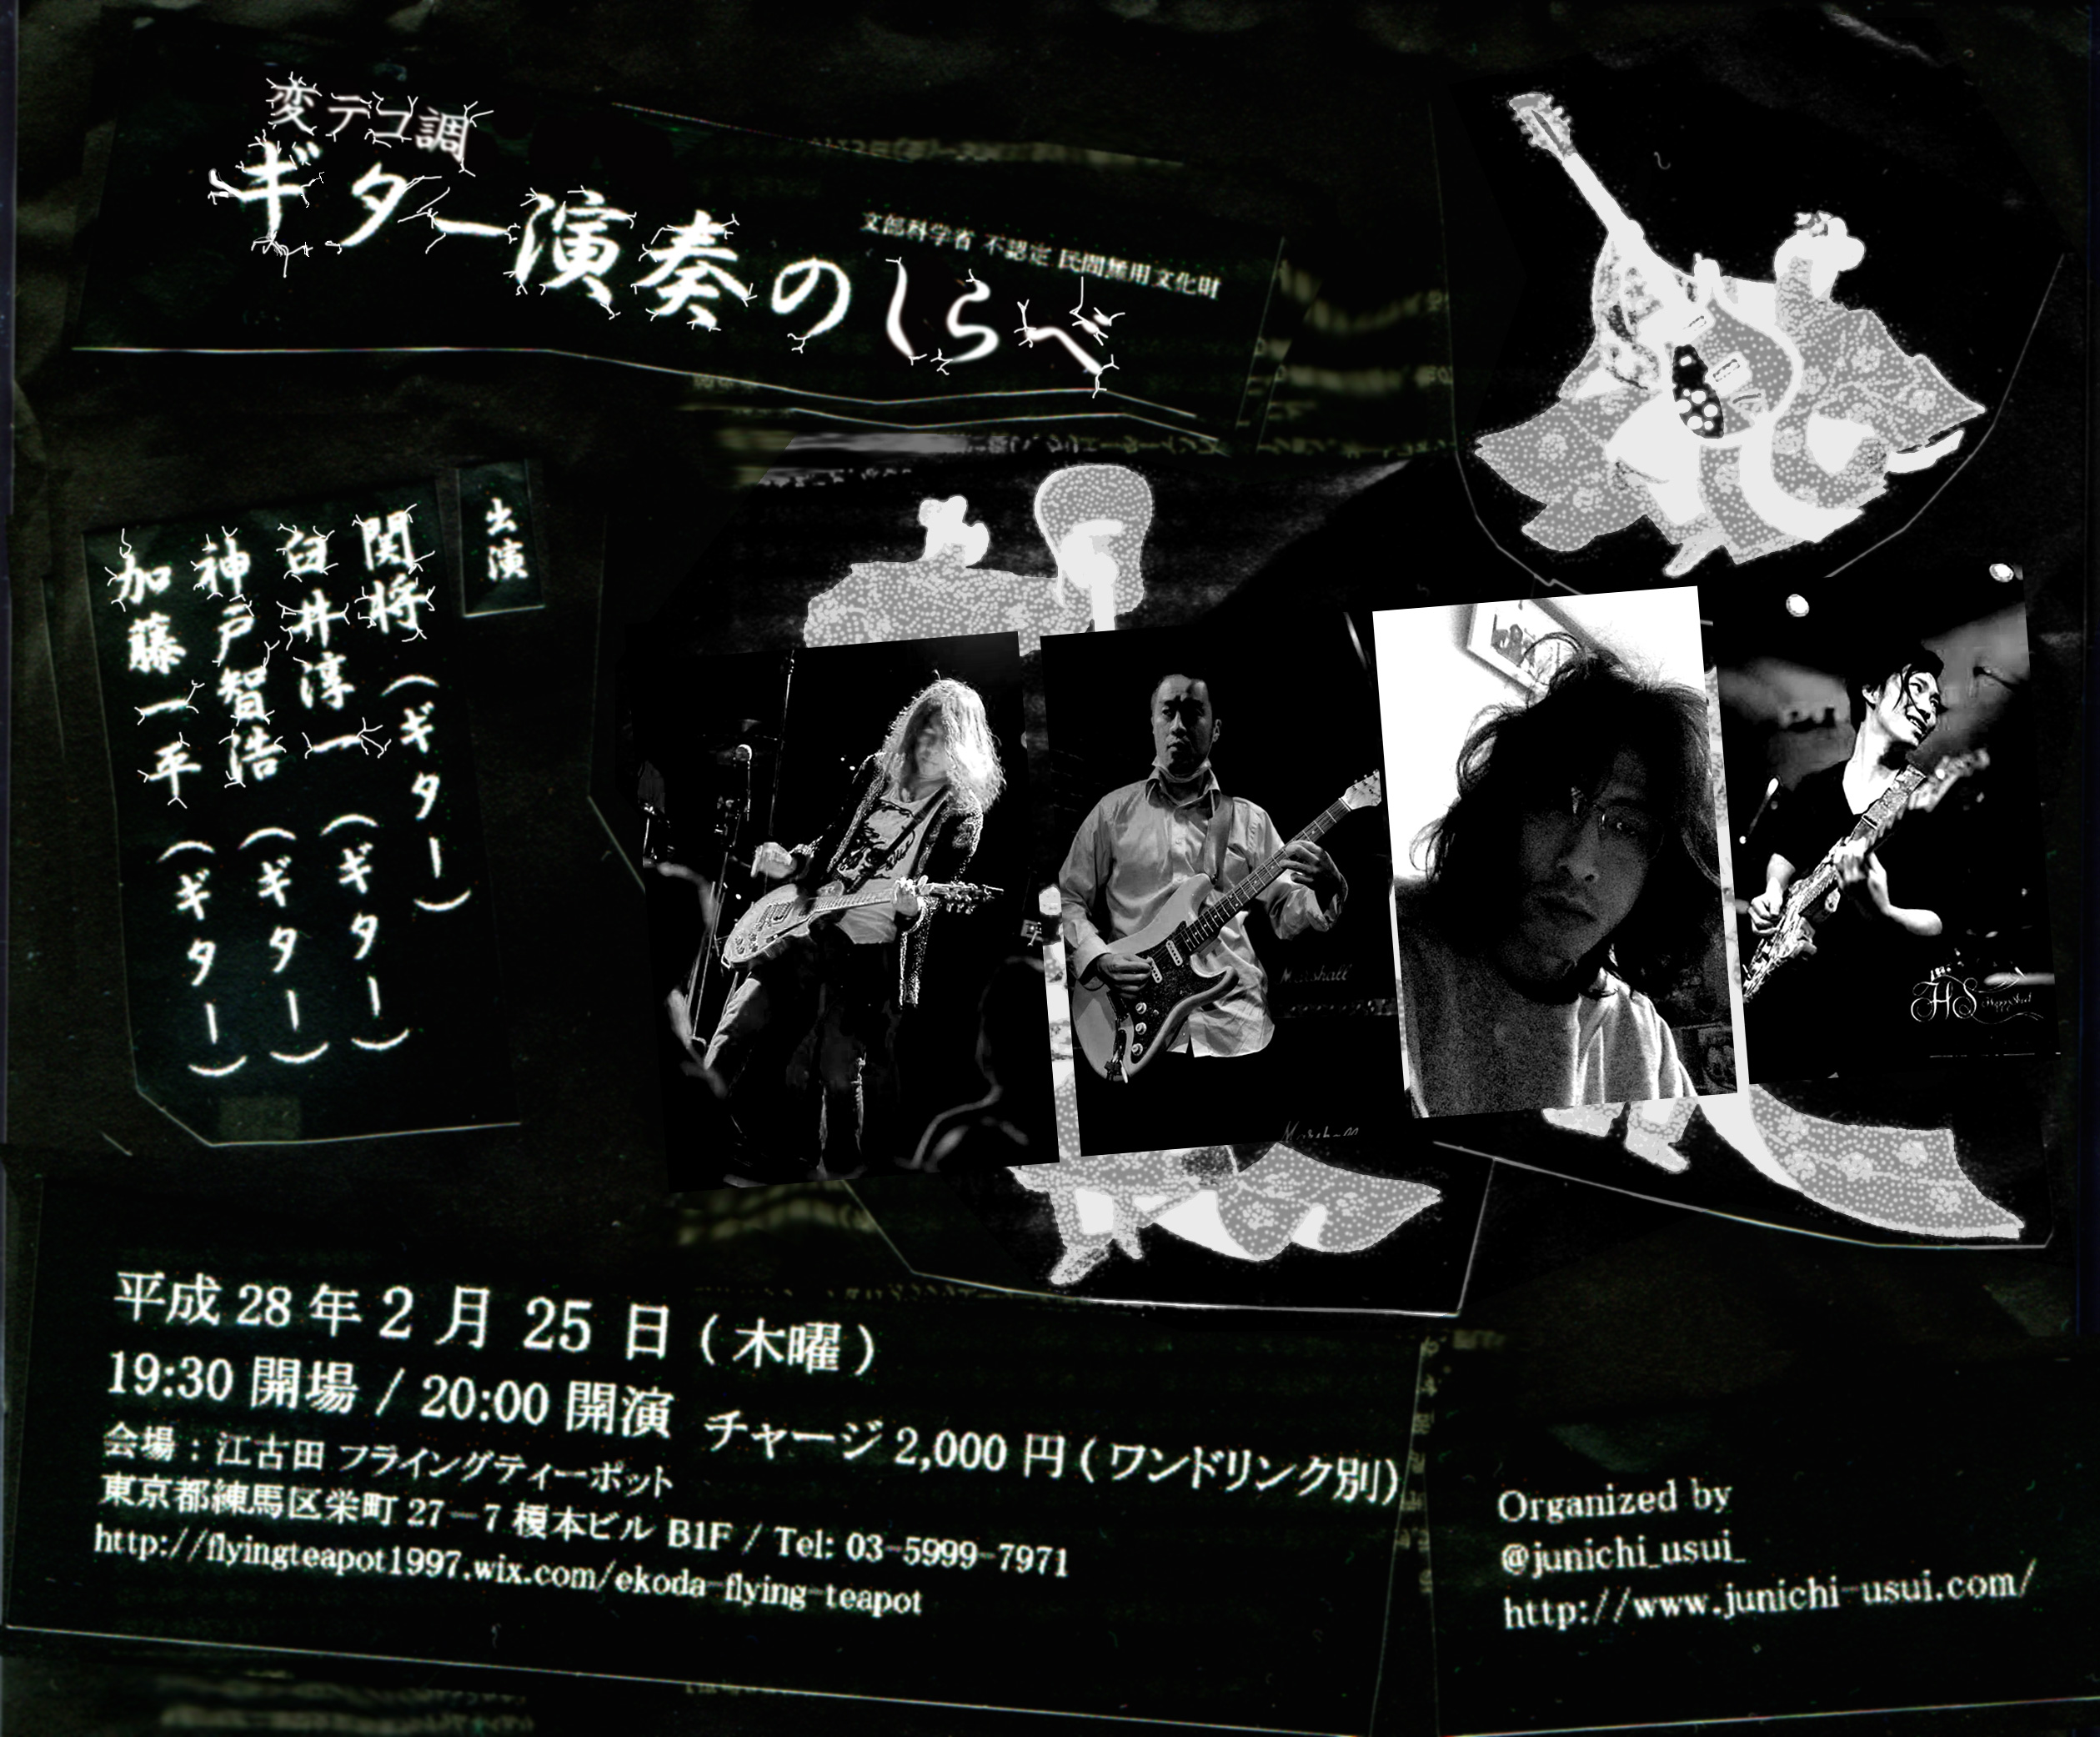 Show SEKI, Junichi USUI, Tomohiro KANBE, Ippei KATOU / Guitar session